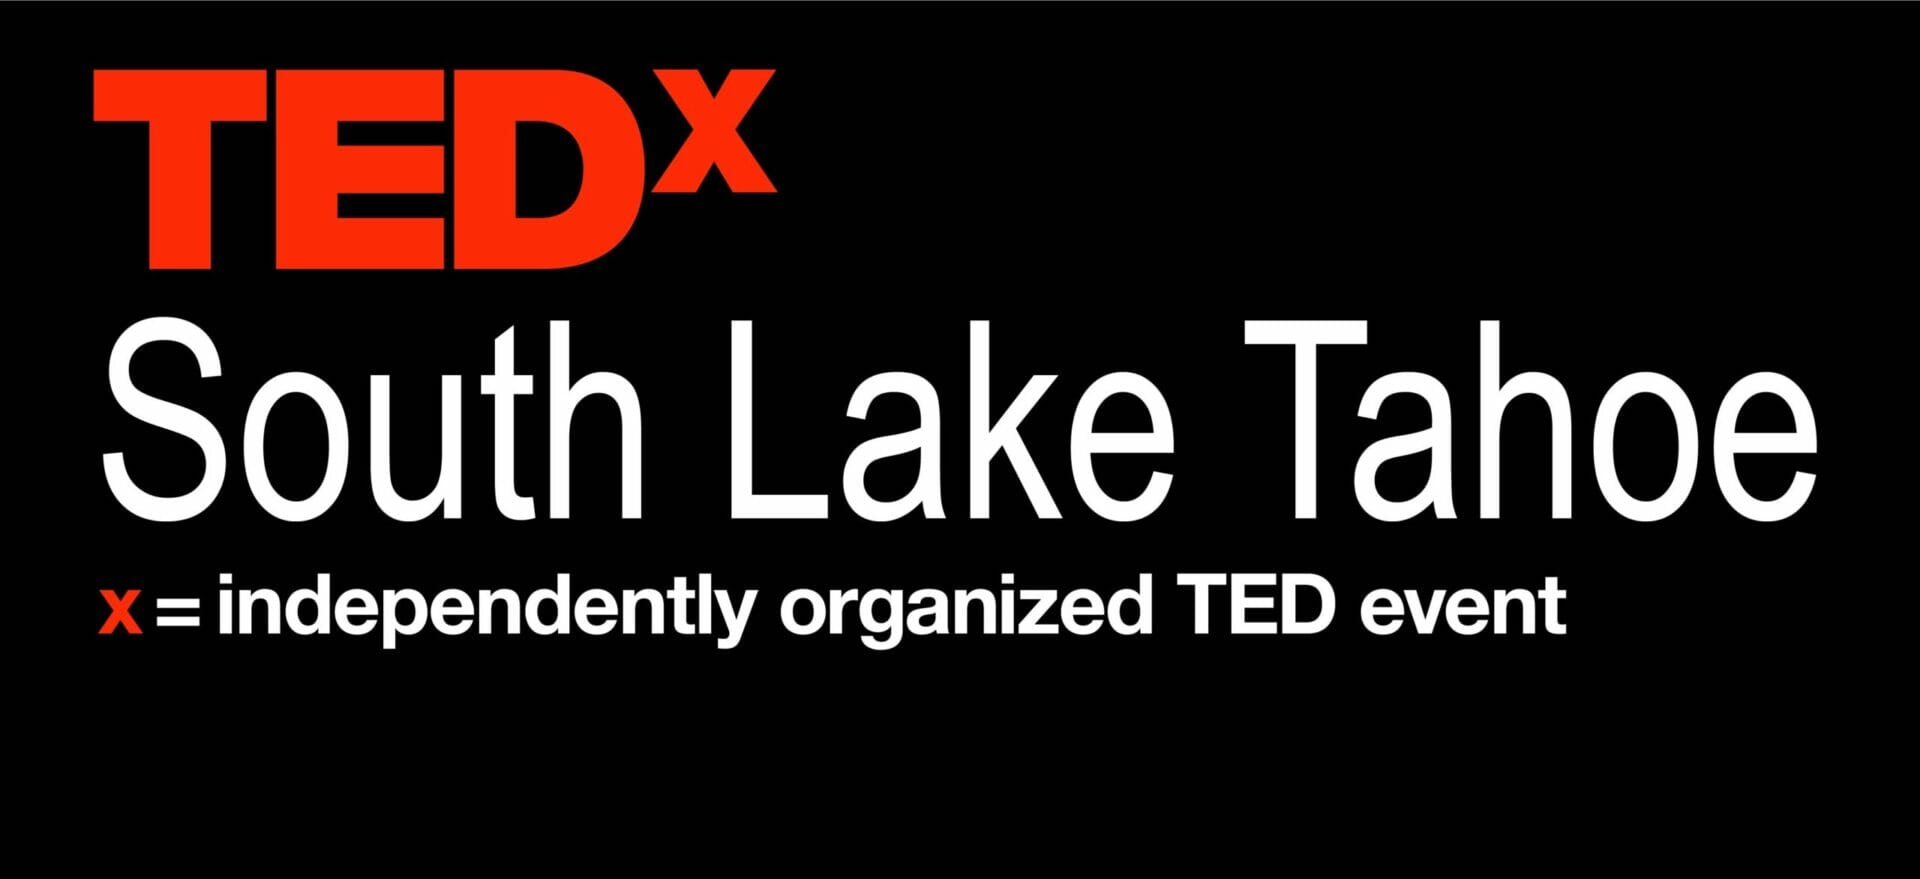 TEDx South Lake Tahoe!